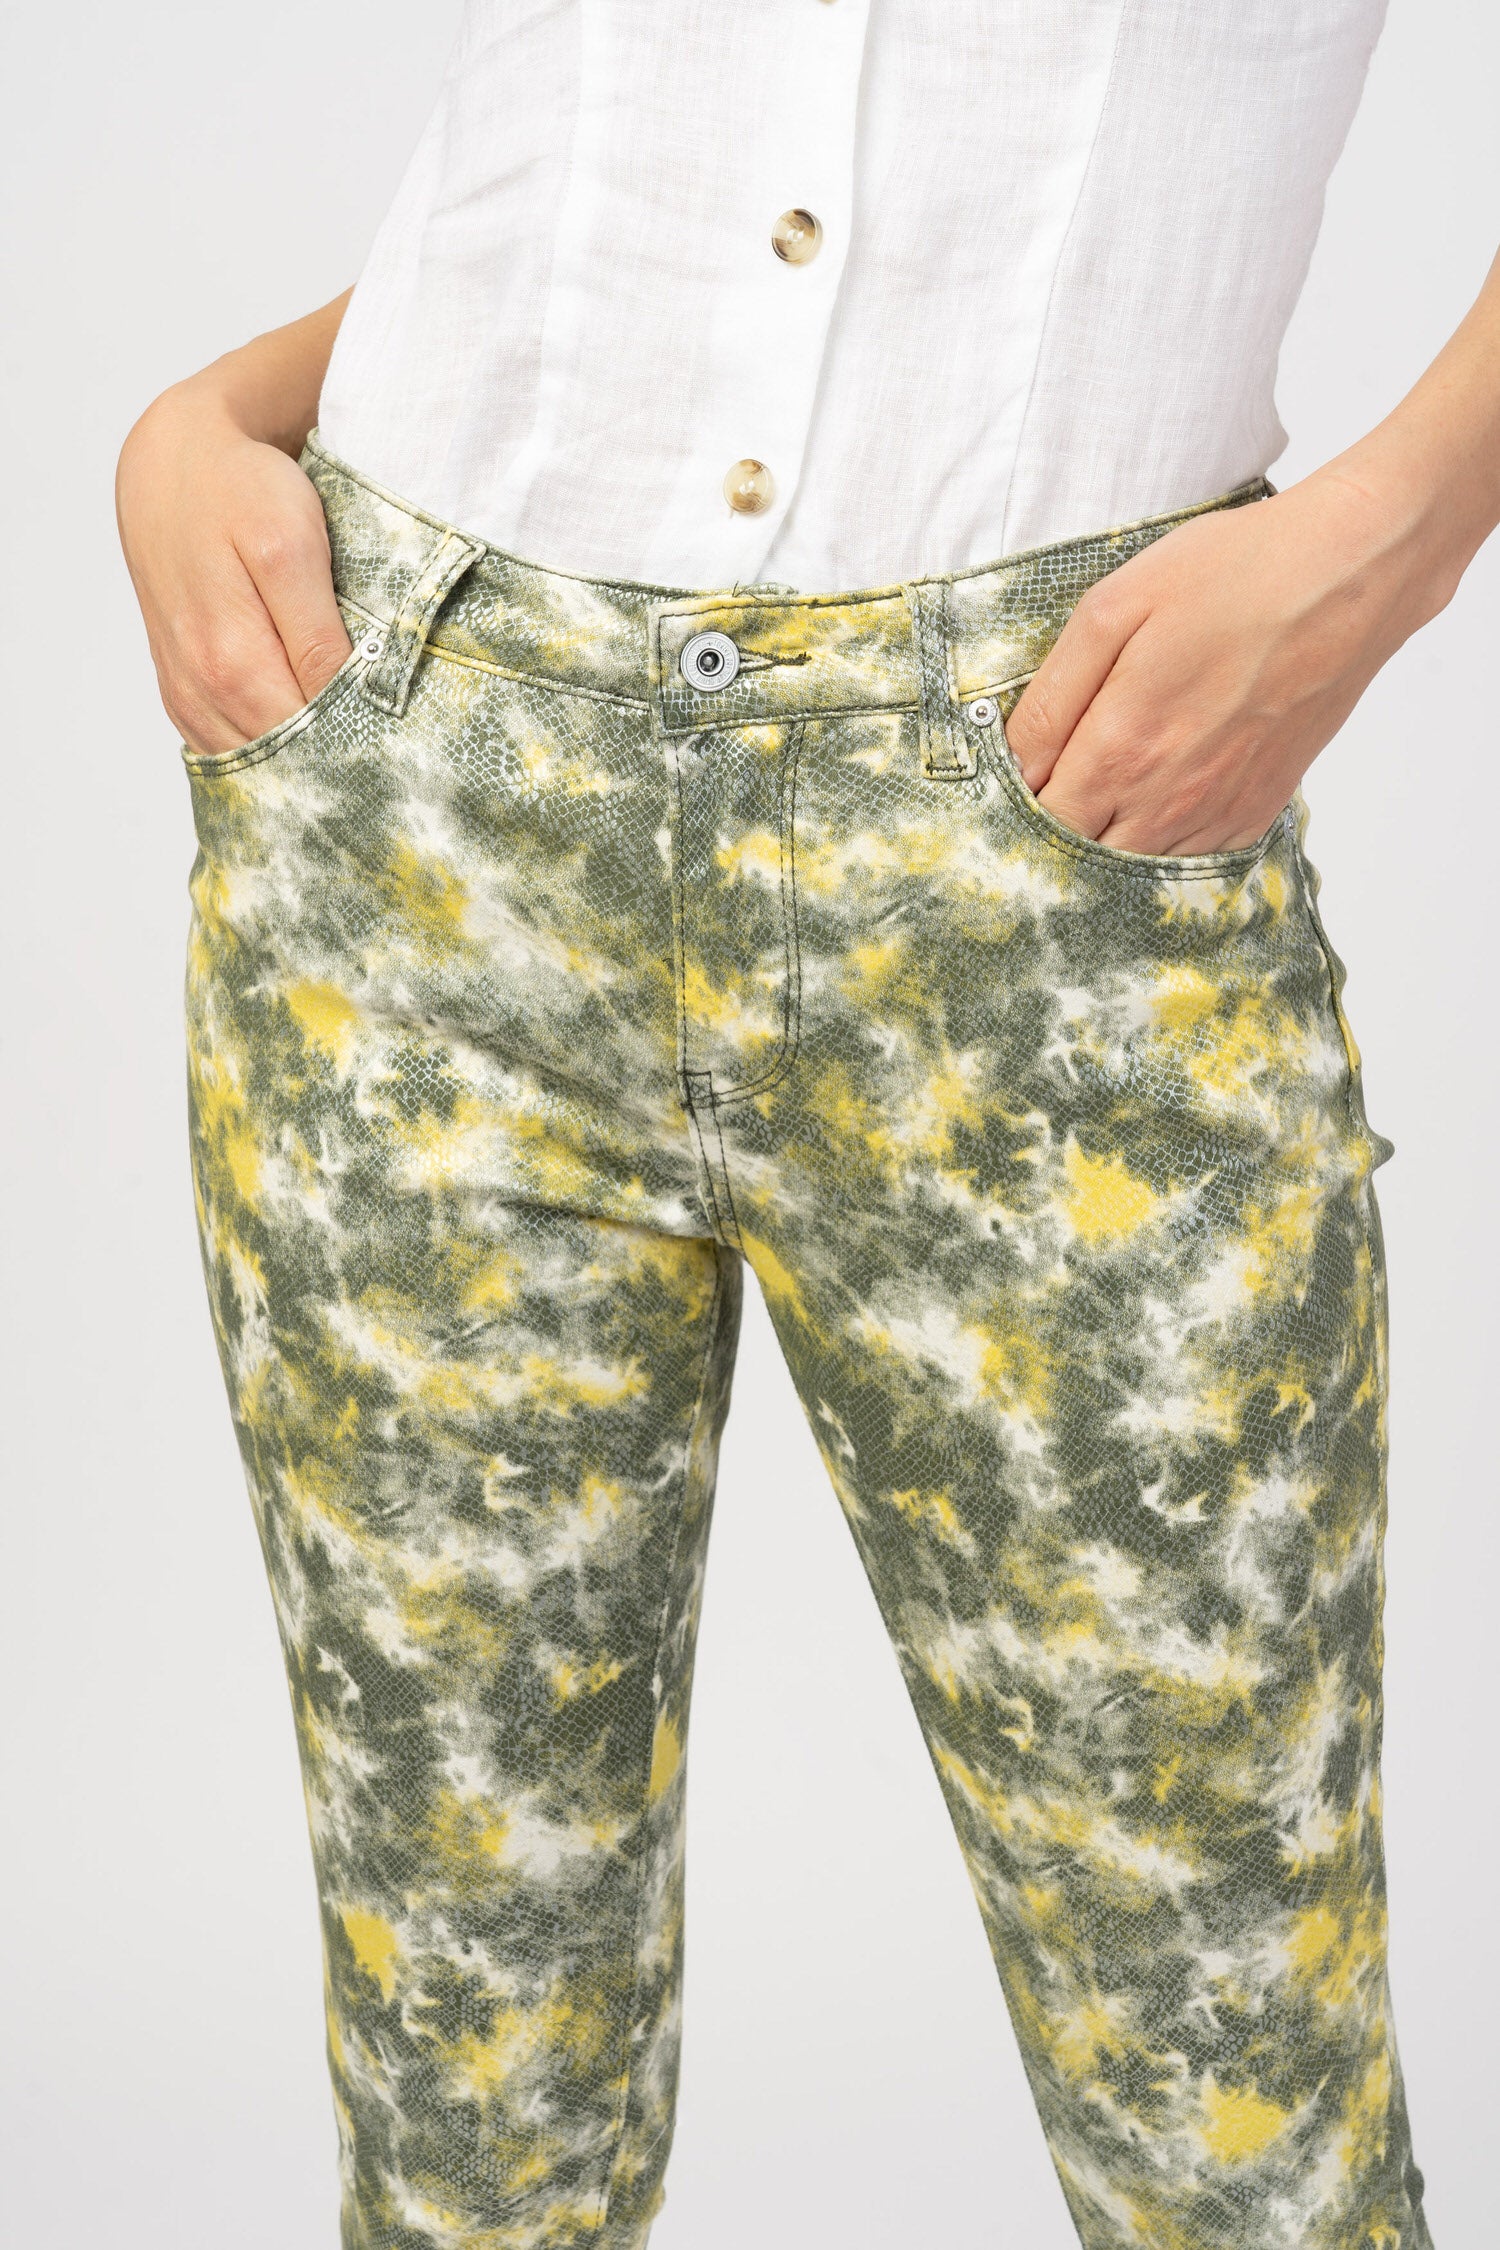 Camo printed pants - Ten